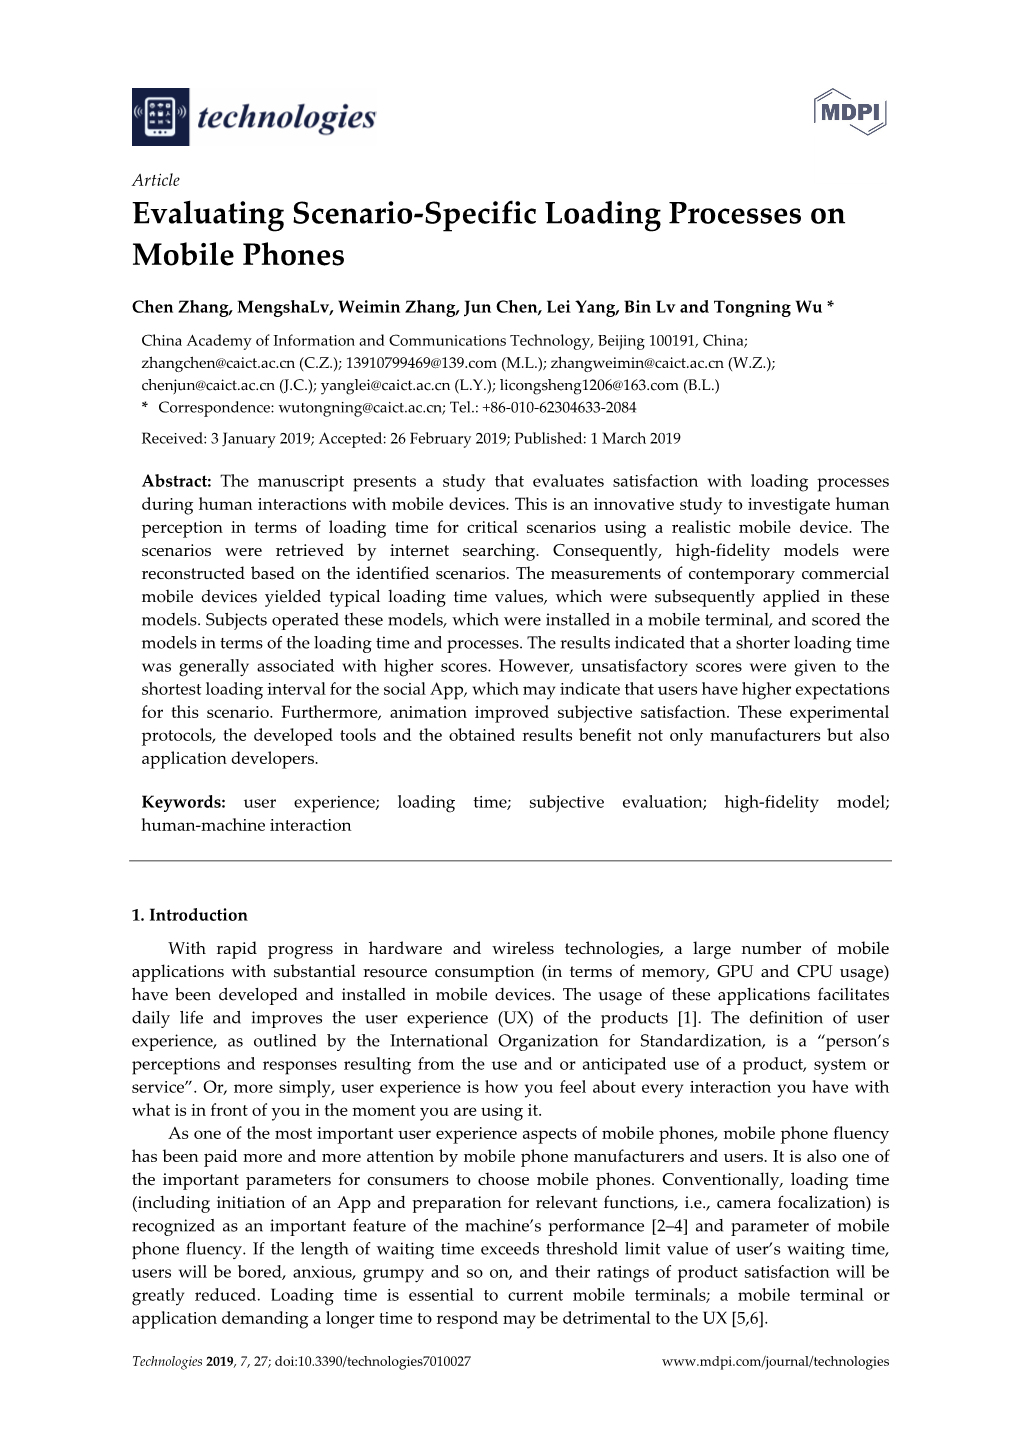 Evaluating Scenario-Specific Loading Processes on Mobile Phones